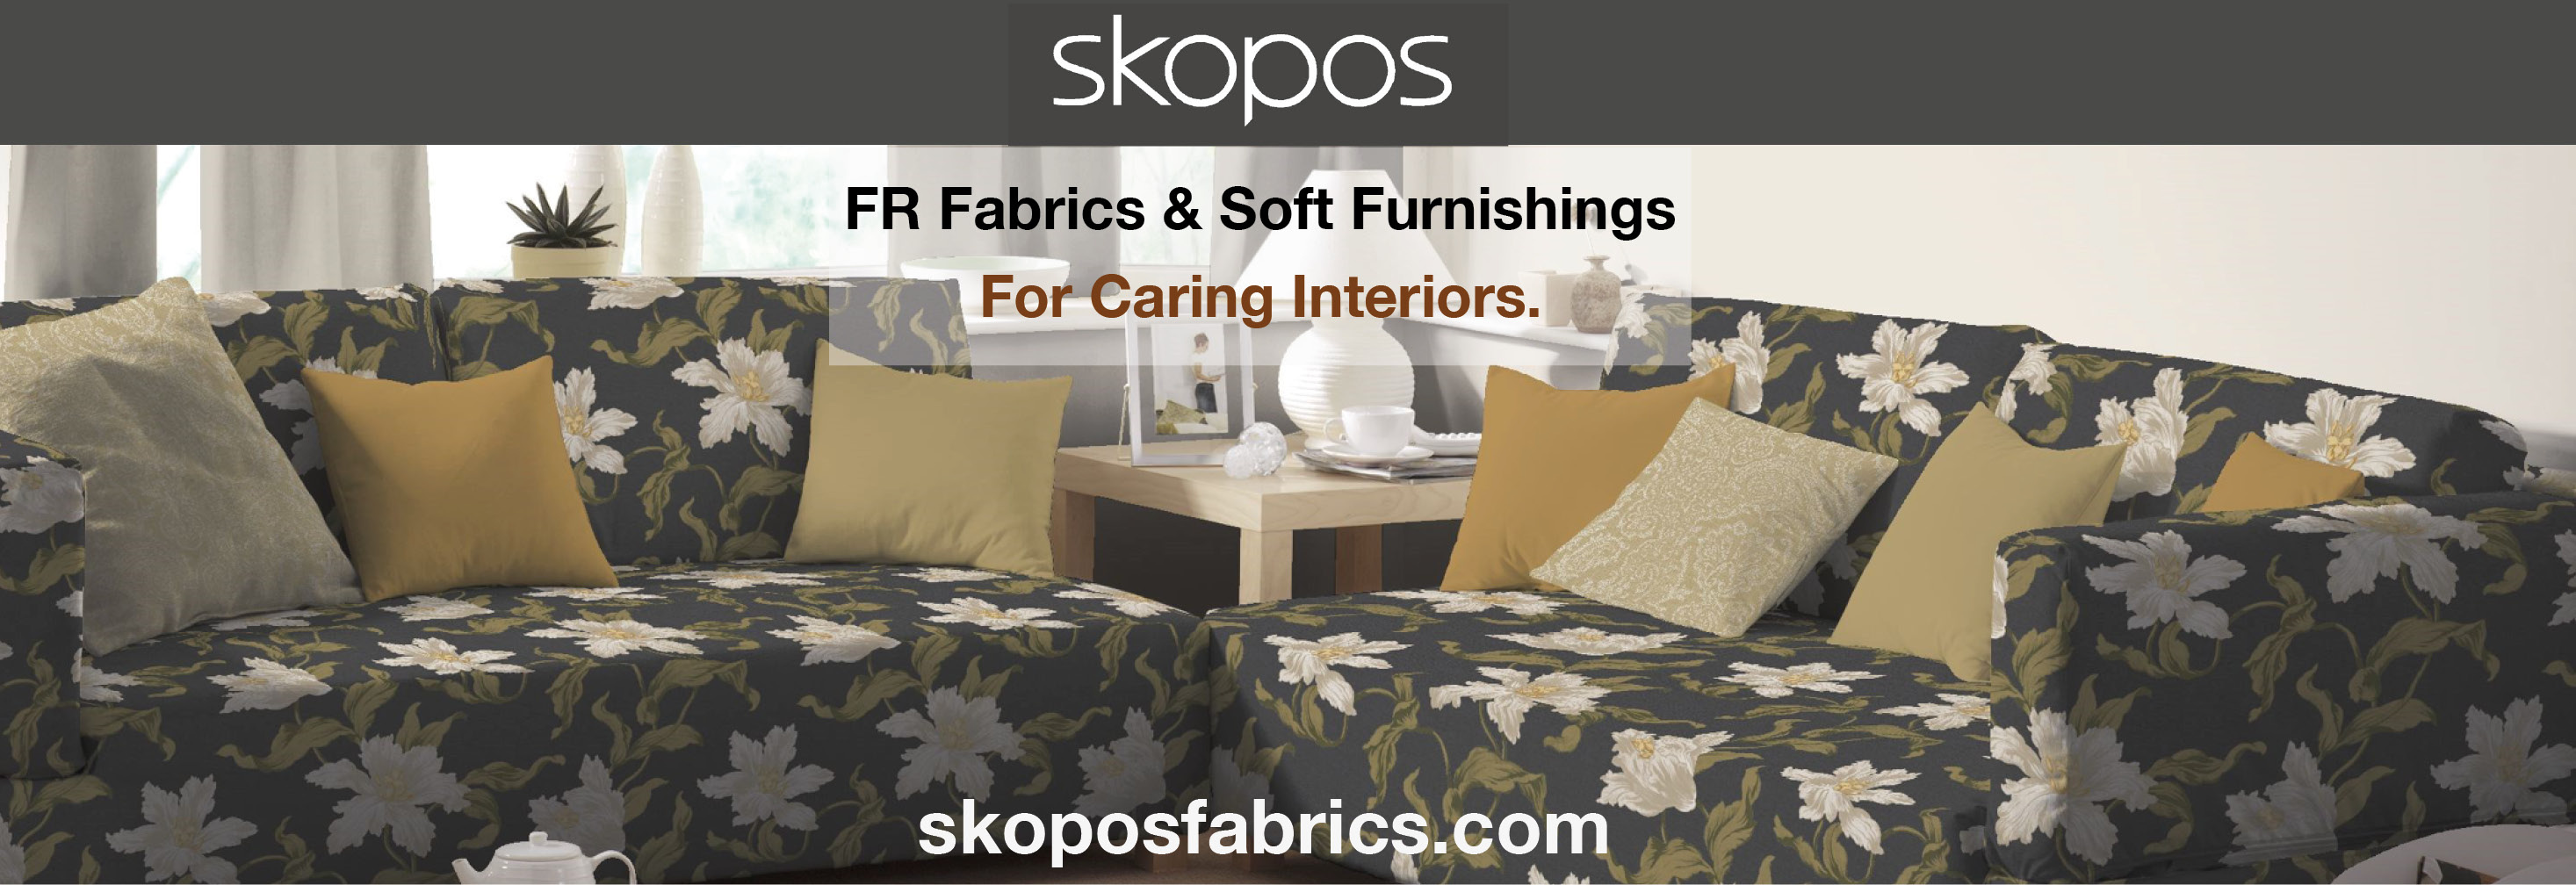 Skopos Fabrics